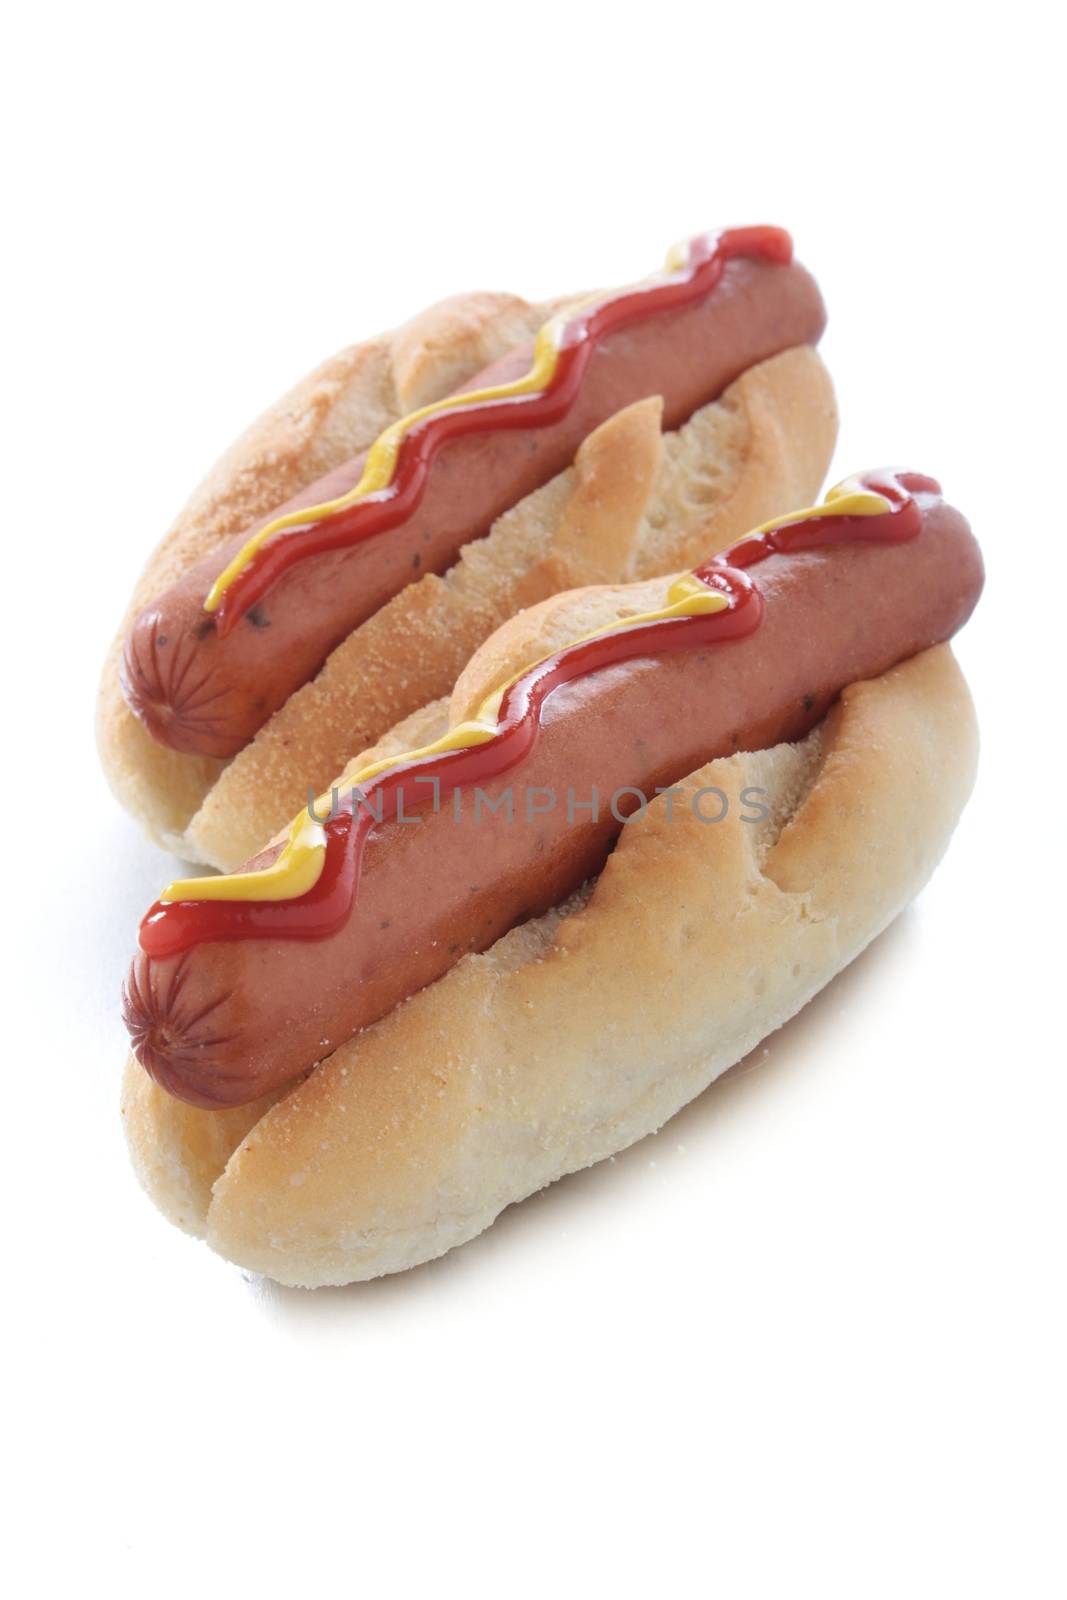 hot dog in bun by neil_langan